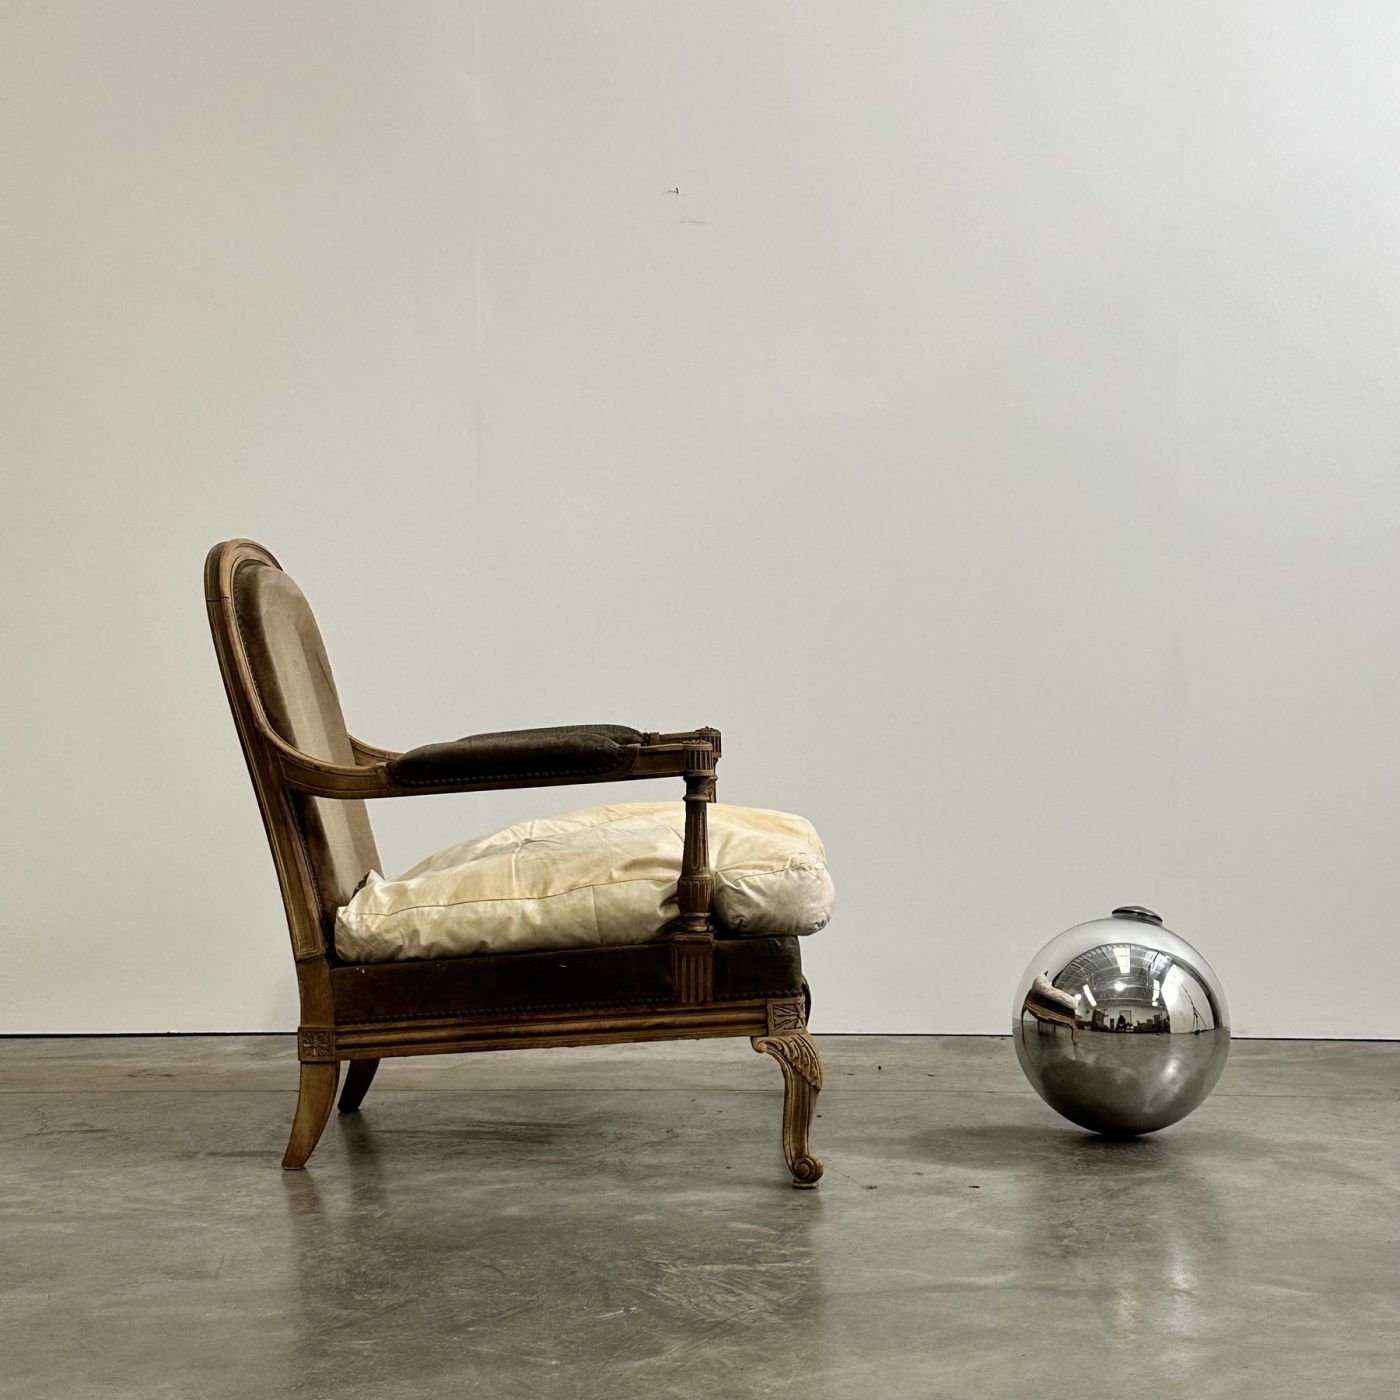 objet-vagabond-armchair0003